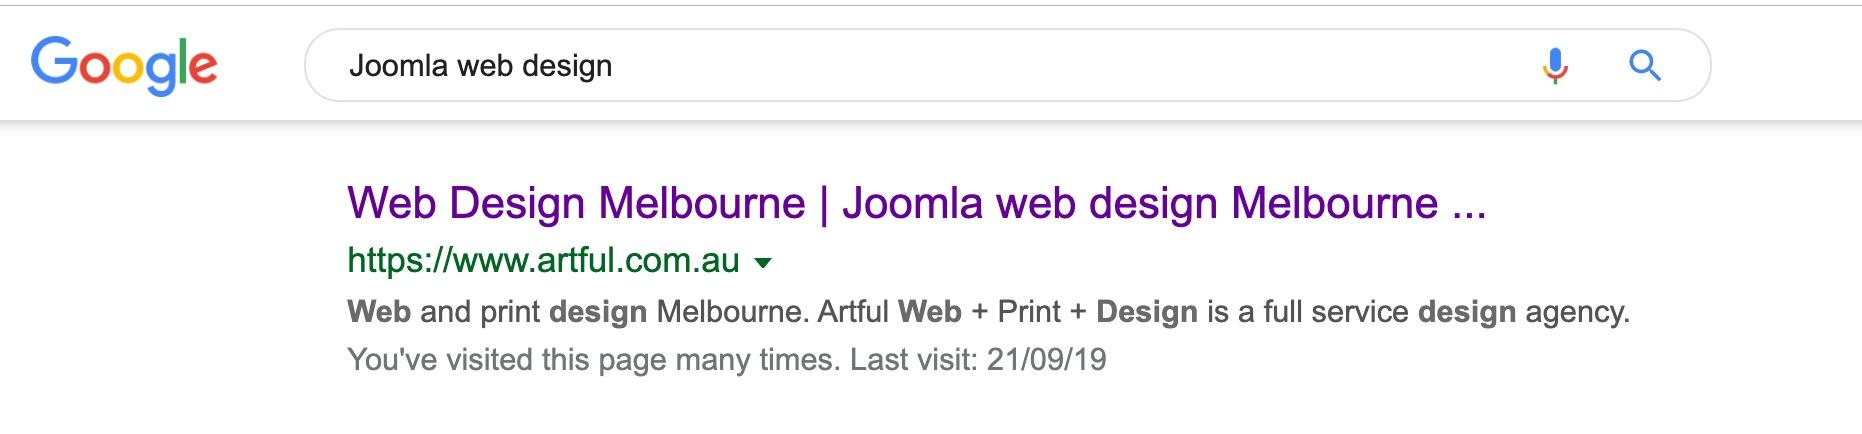 Joomla web design Google Search